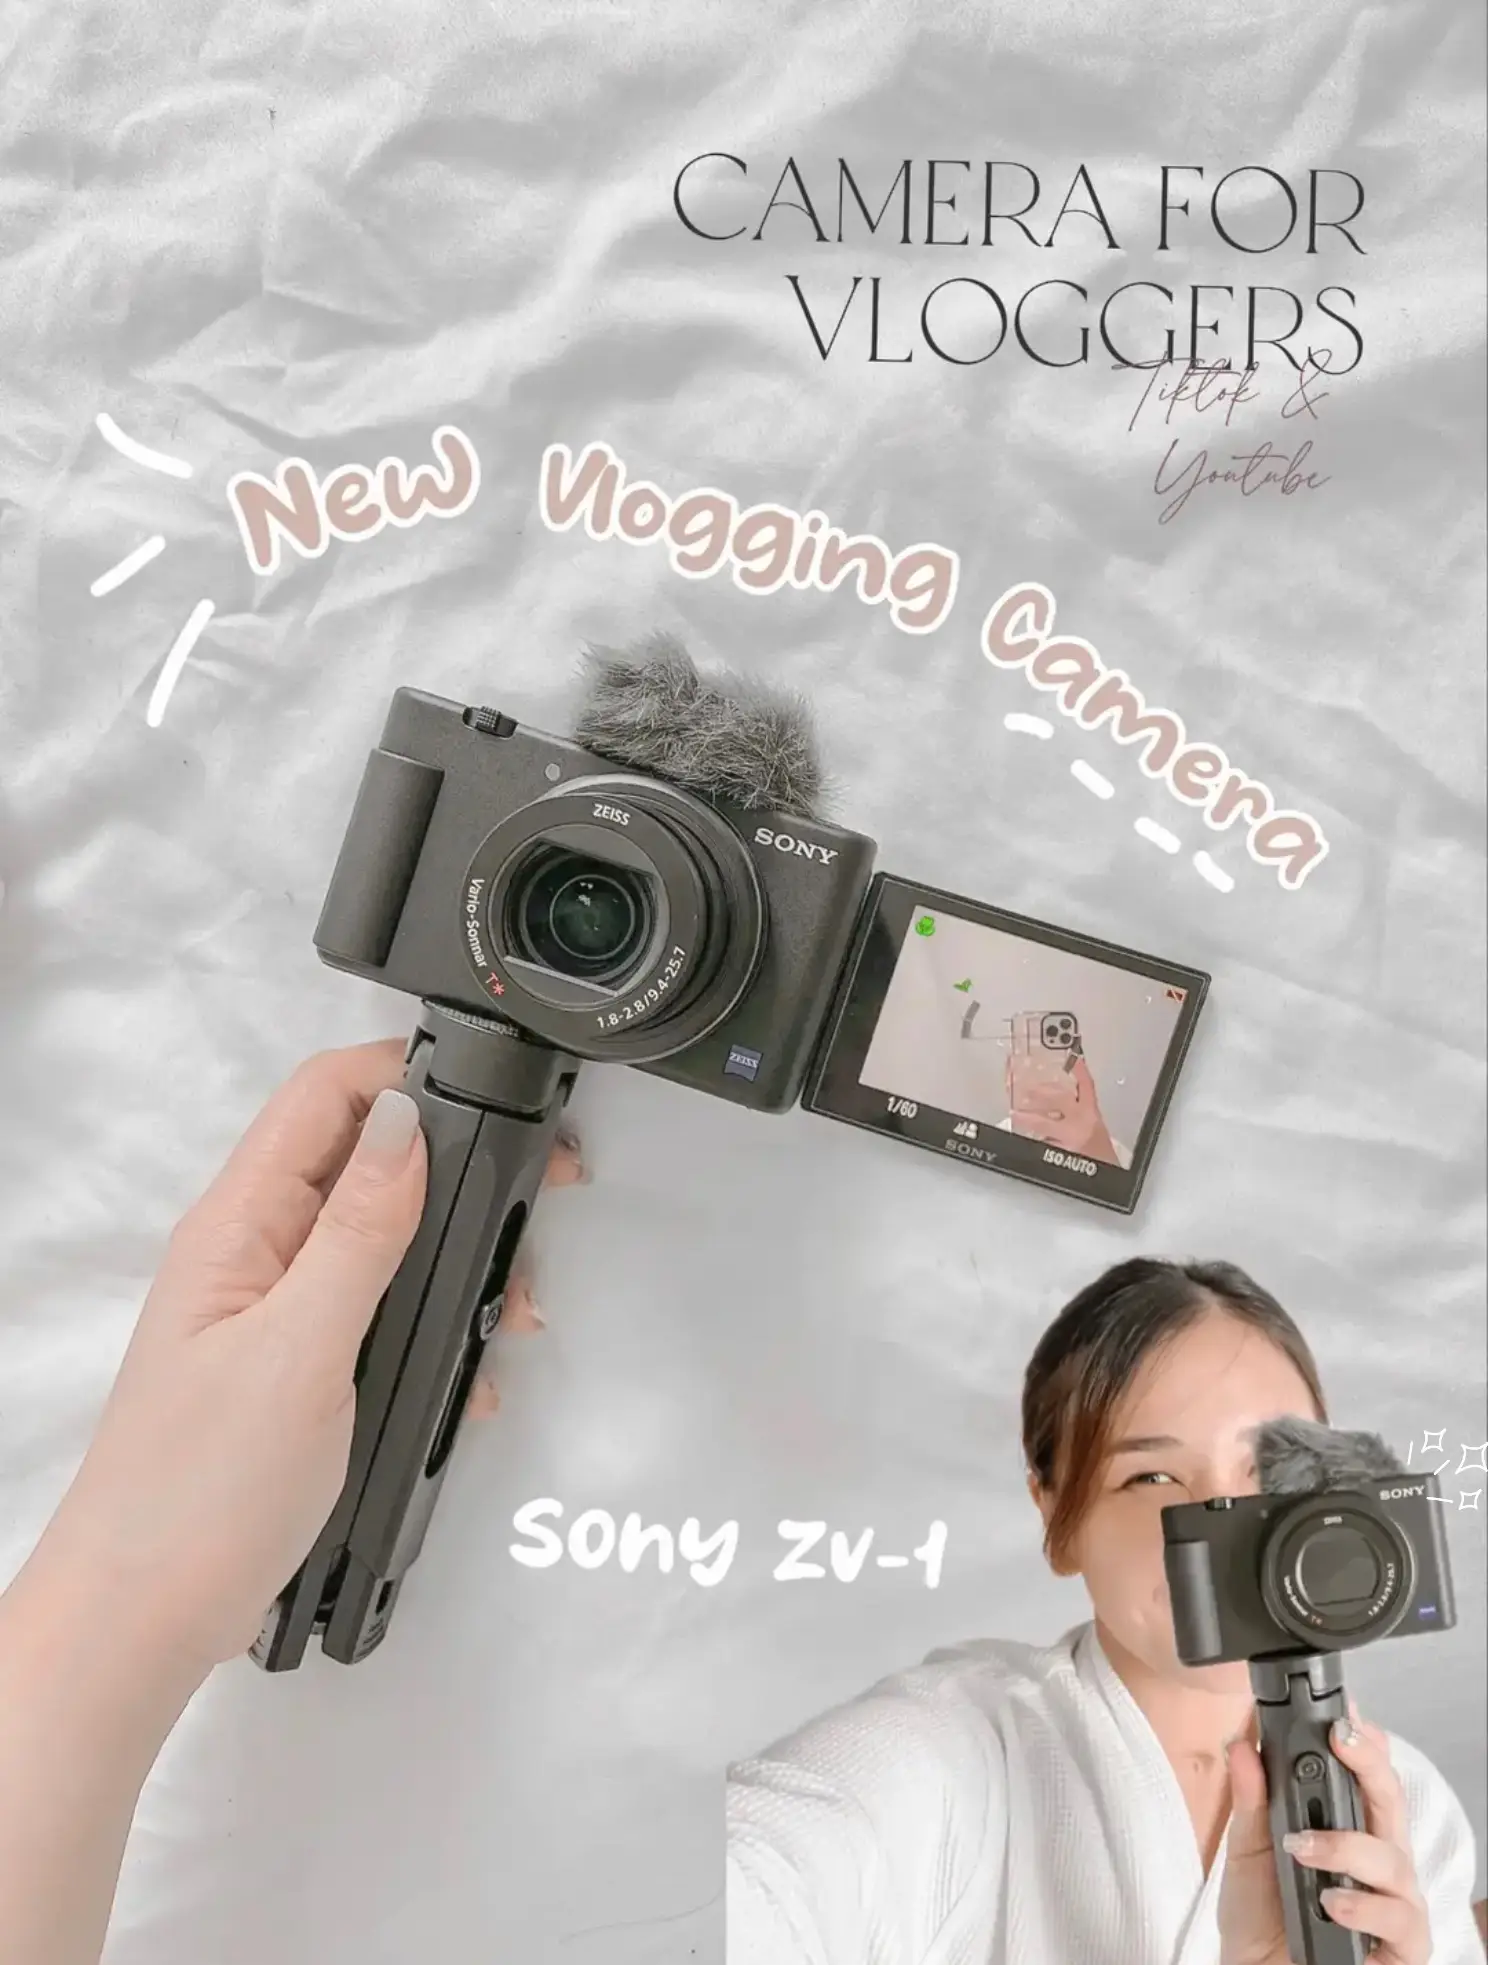 DJI Pocket 3: A Vlogger's Dream Camera, by Afaq Ahmad